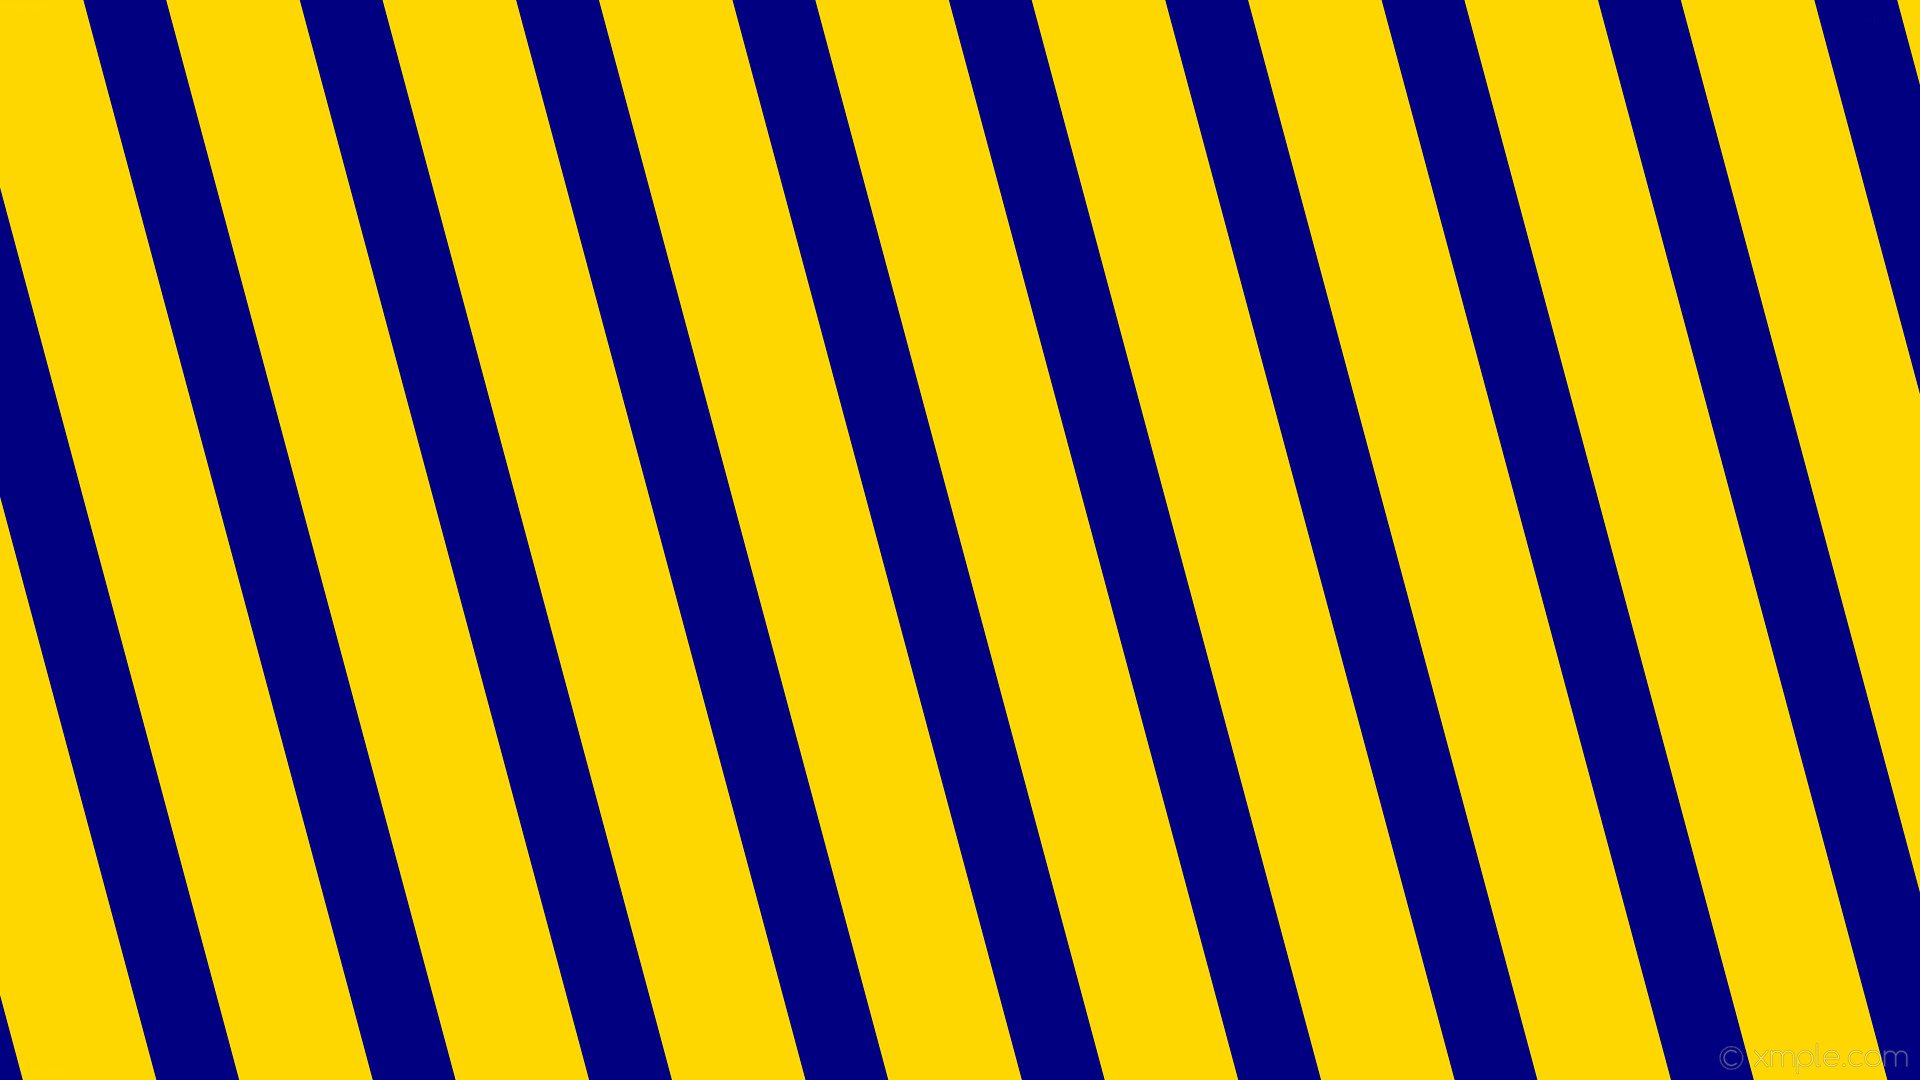 1920x1080 wallpaper yellow streaks blue lines stripes navy gold #000080 #ffd700  diagonal 285Â° 80px